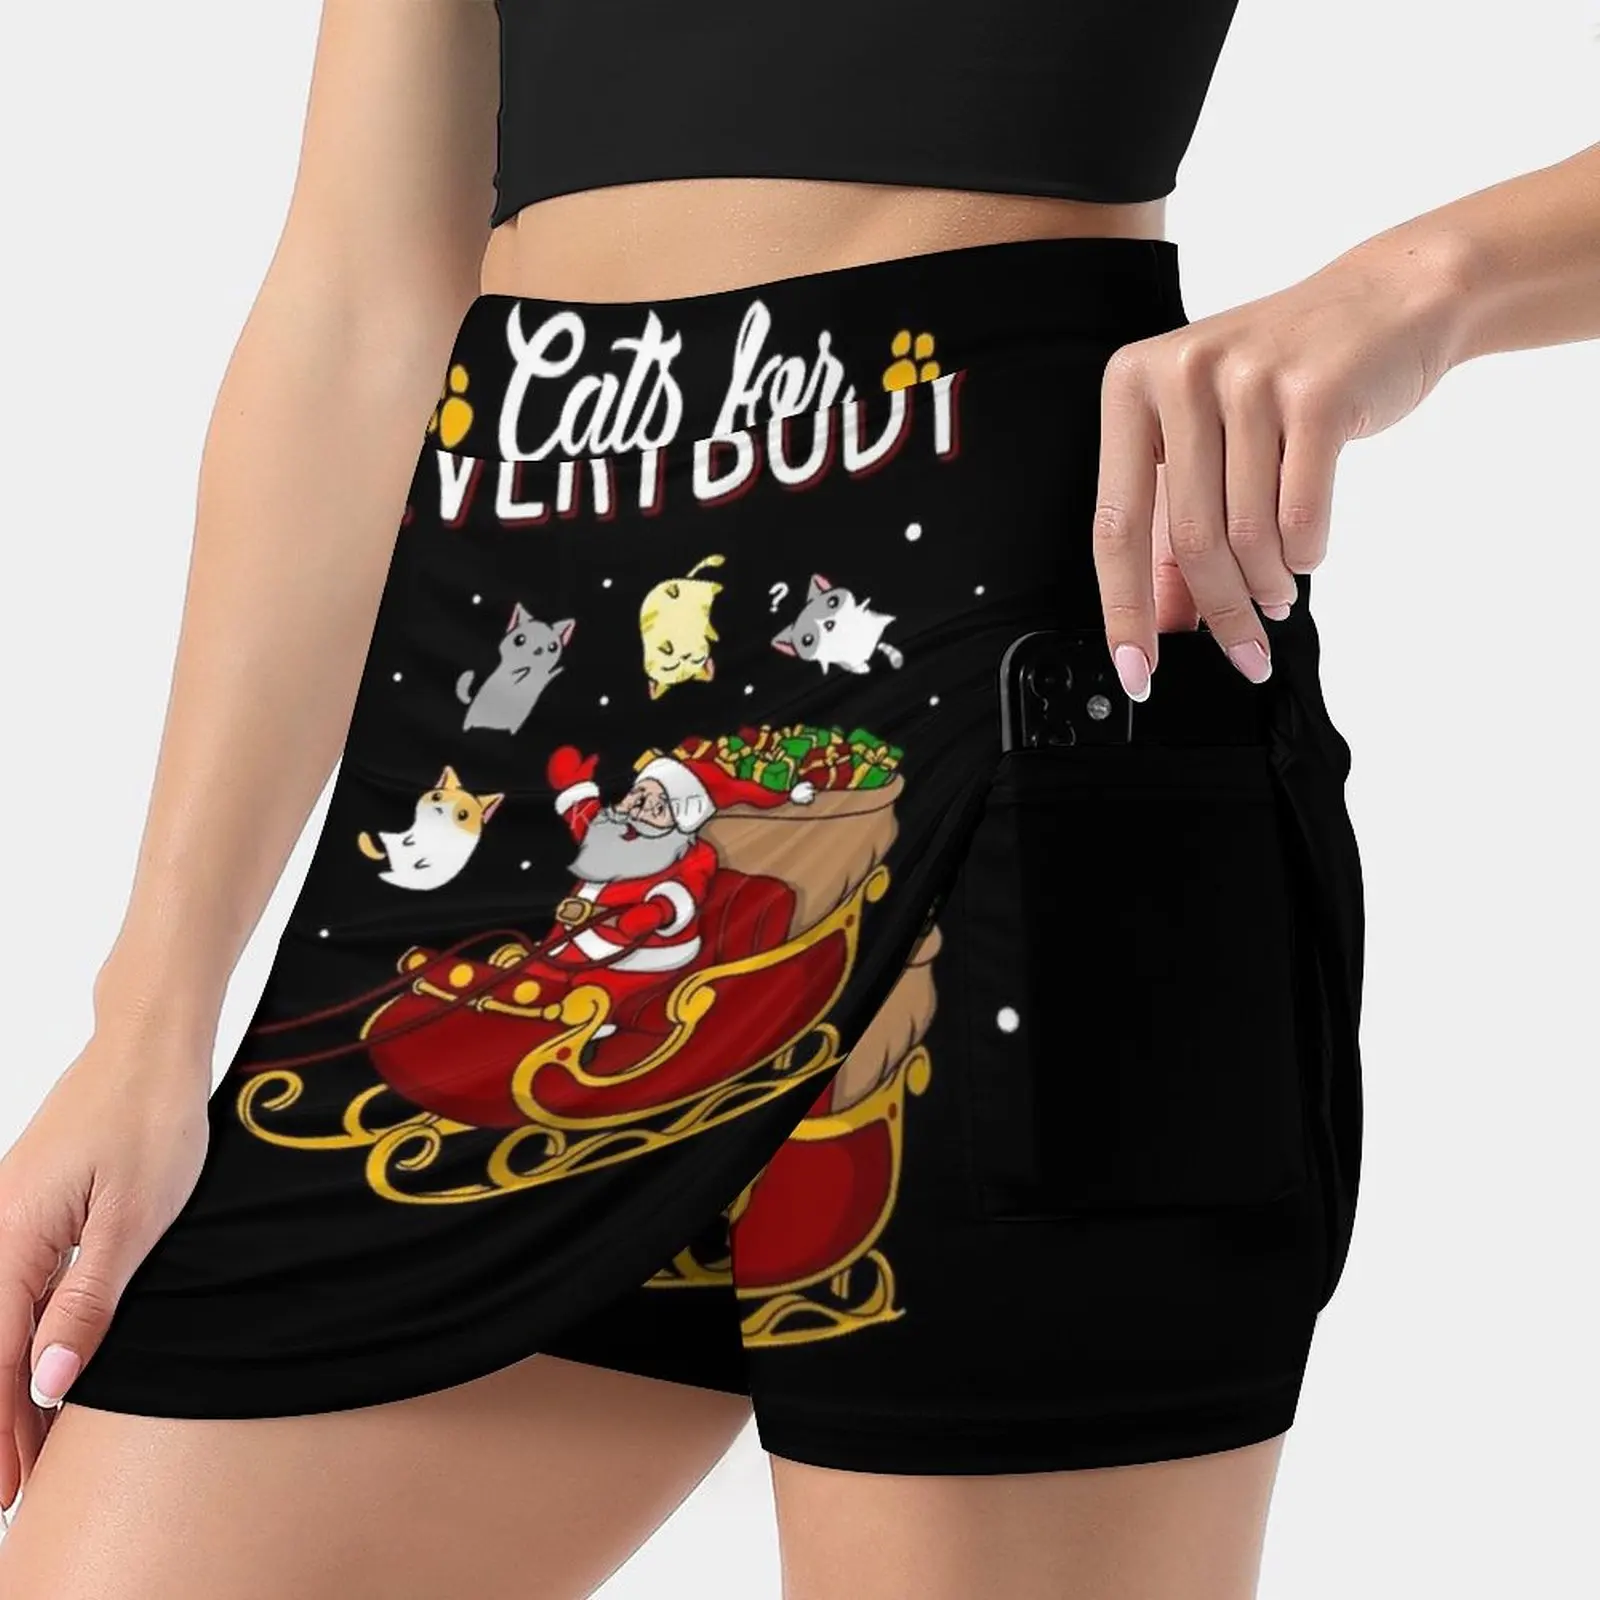 

Cats For Everybody Funny Ugly Christmas Sweatshirt Women's skirt Sport Skort Skirt With Pocket Fashion Korean Style Skirt 4Xl